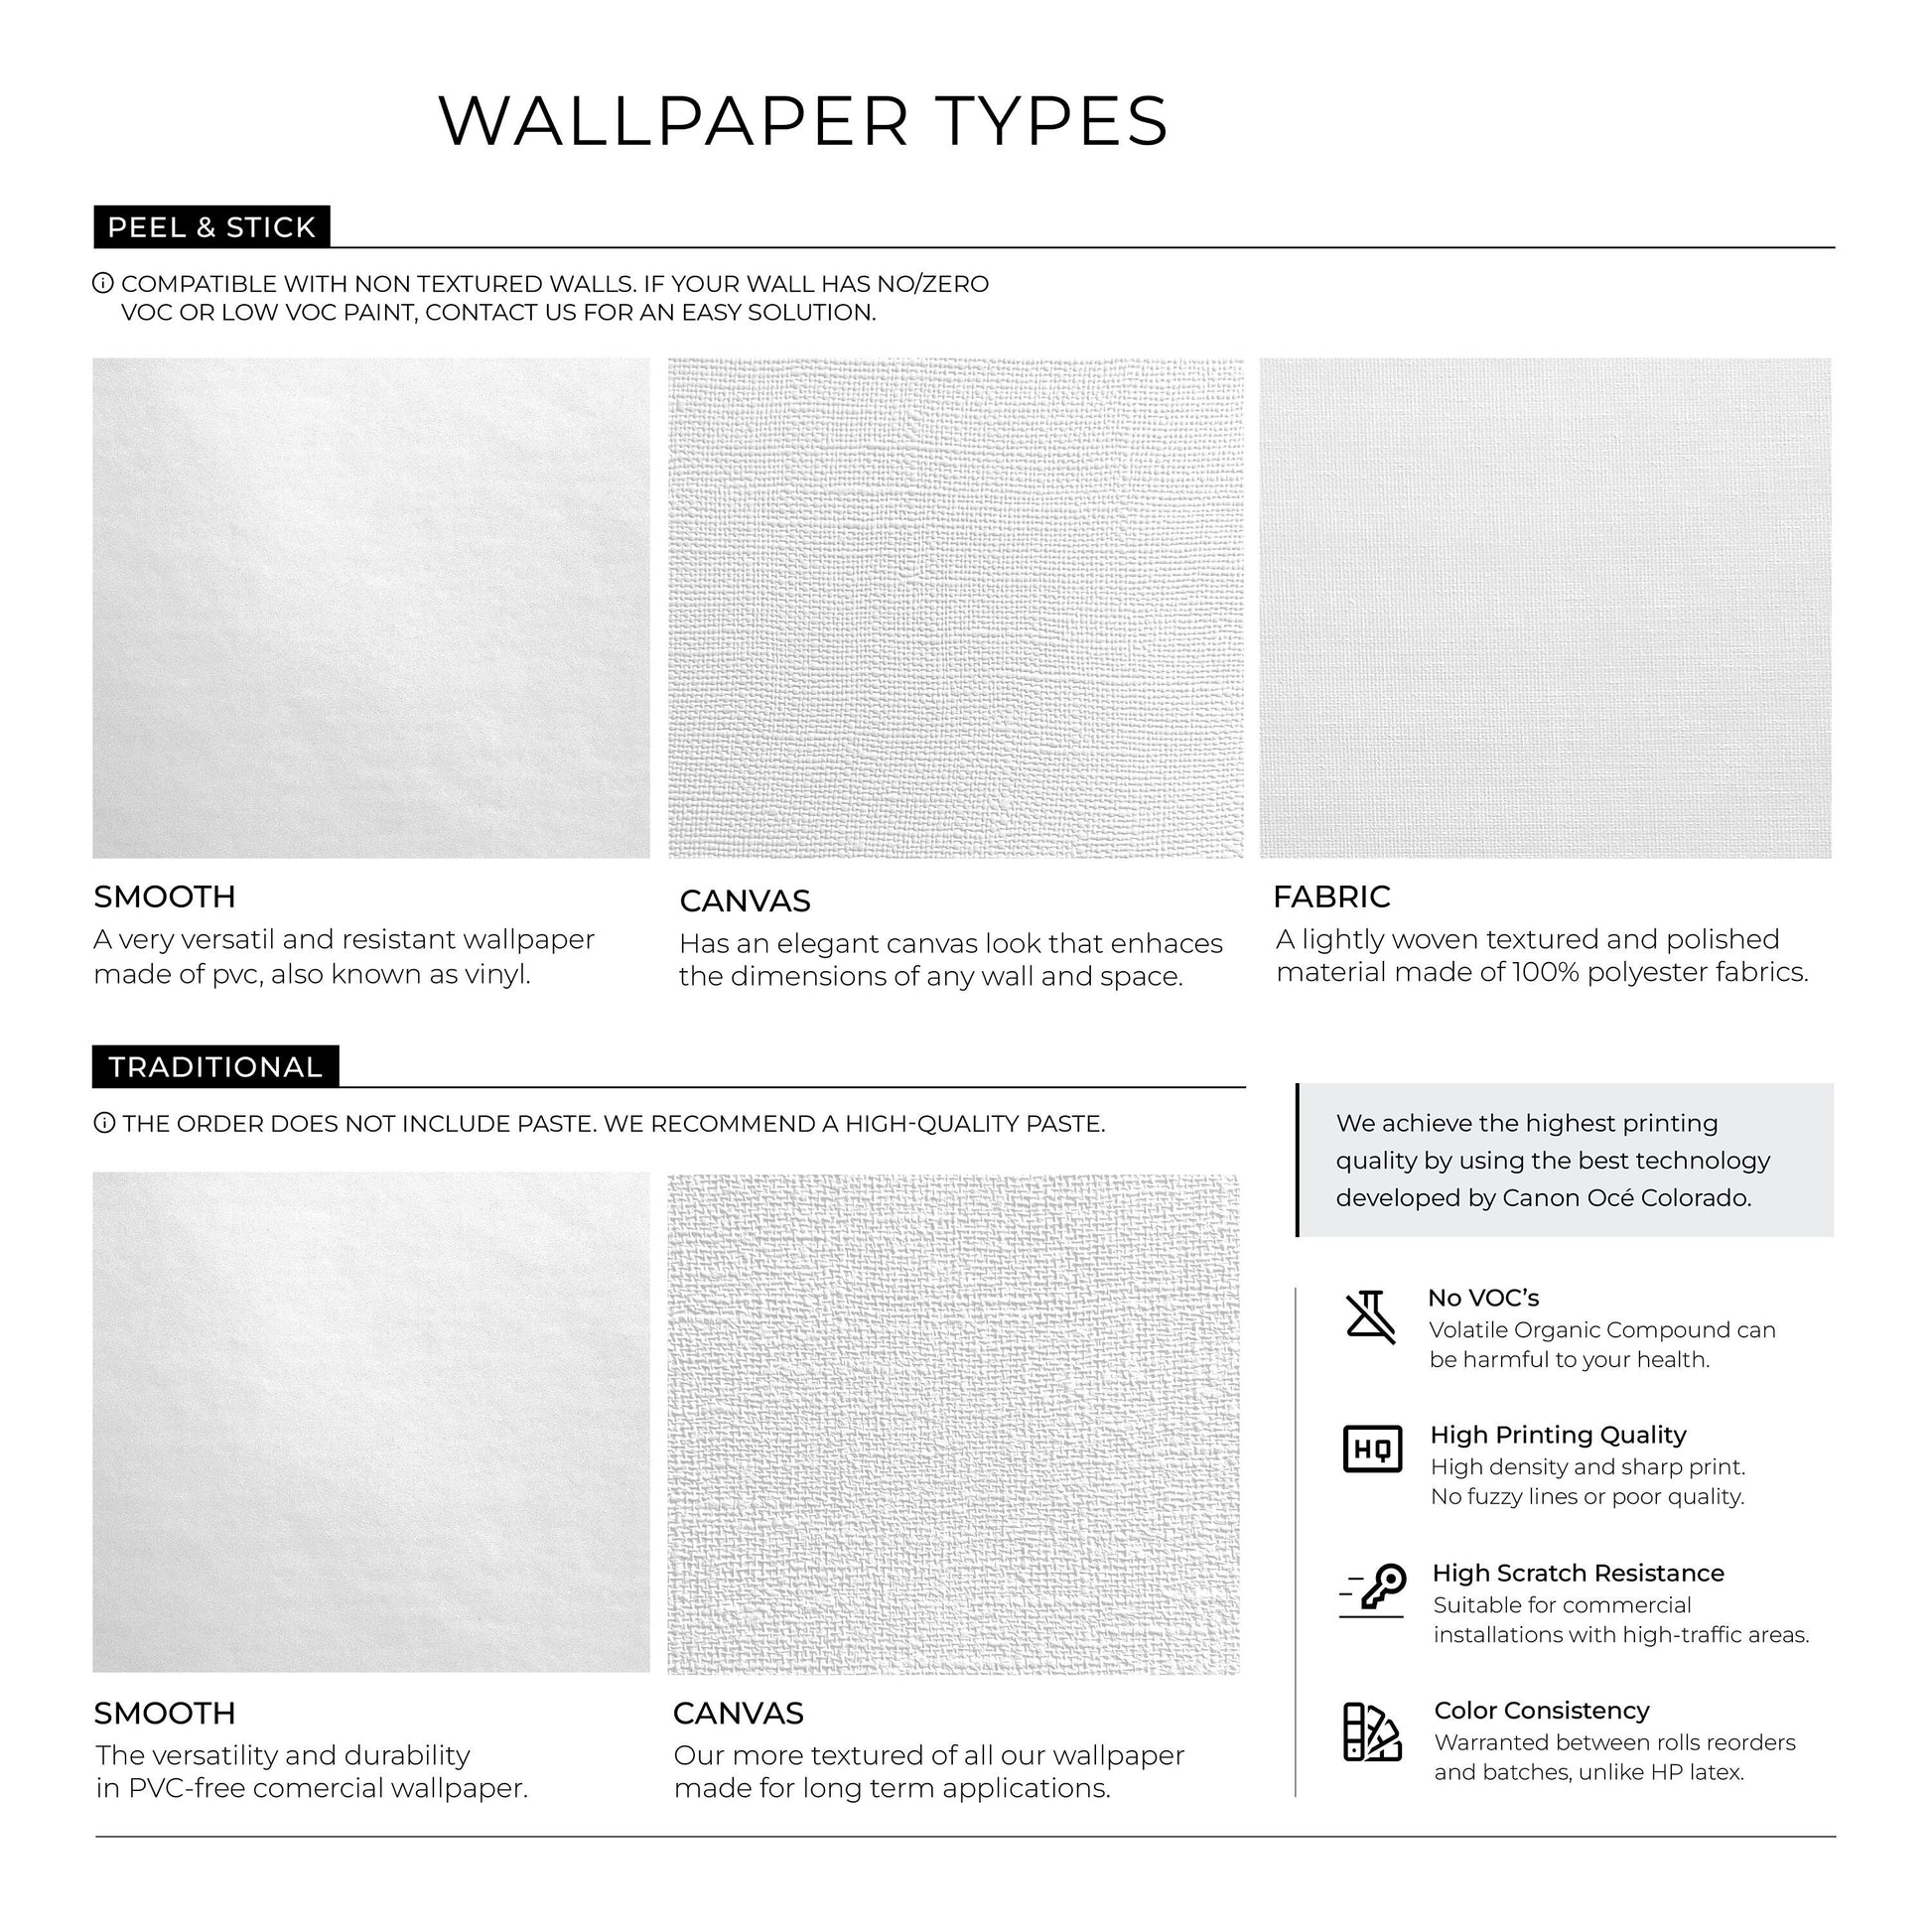 Black and White Striped Wallpaper / Peel and Stick Wallpaper Removable Wallpaper Home Decor Wall Art Wall Decor Room Decor - C894